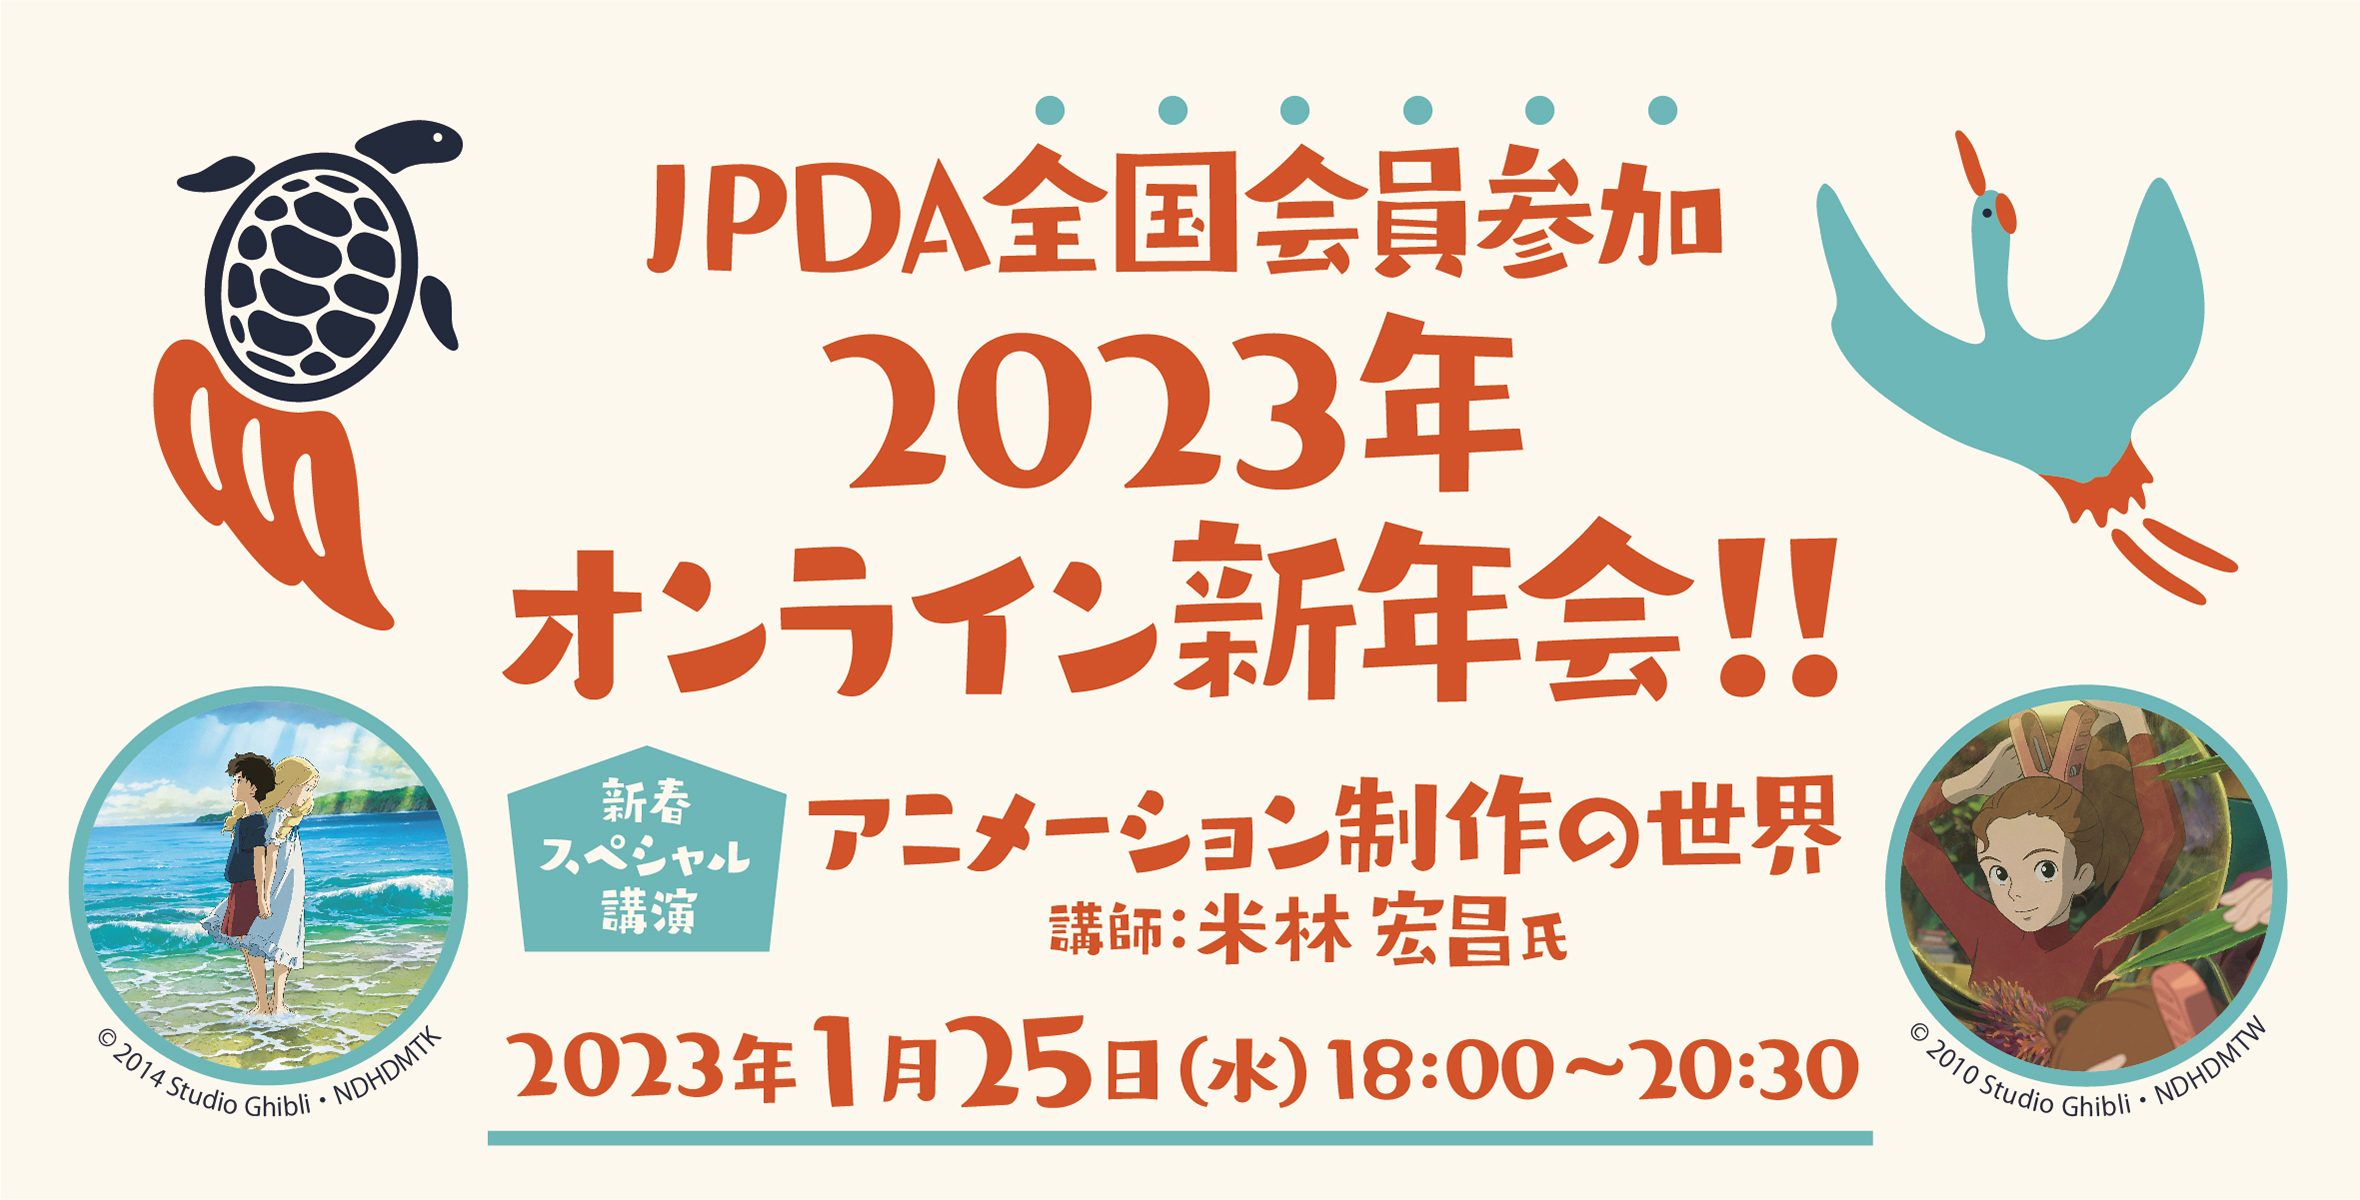 JPDA全国会員参加　2023年オンライン新年会のイメージ